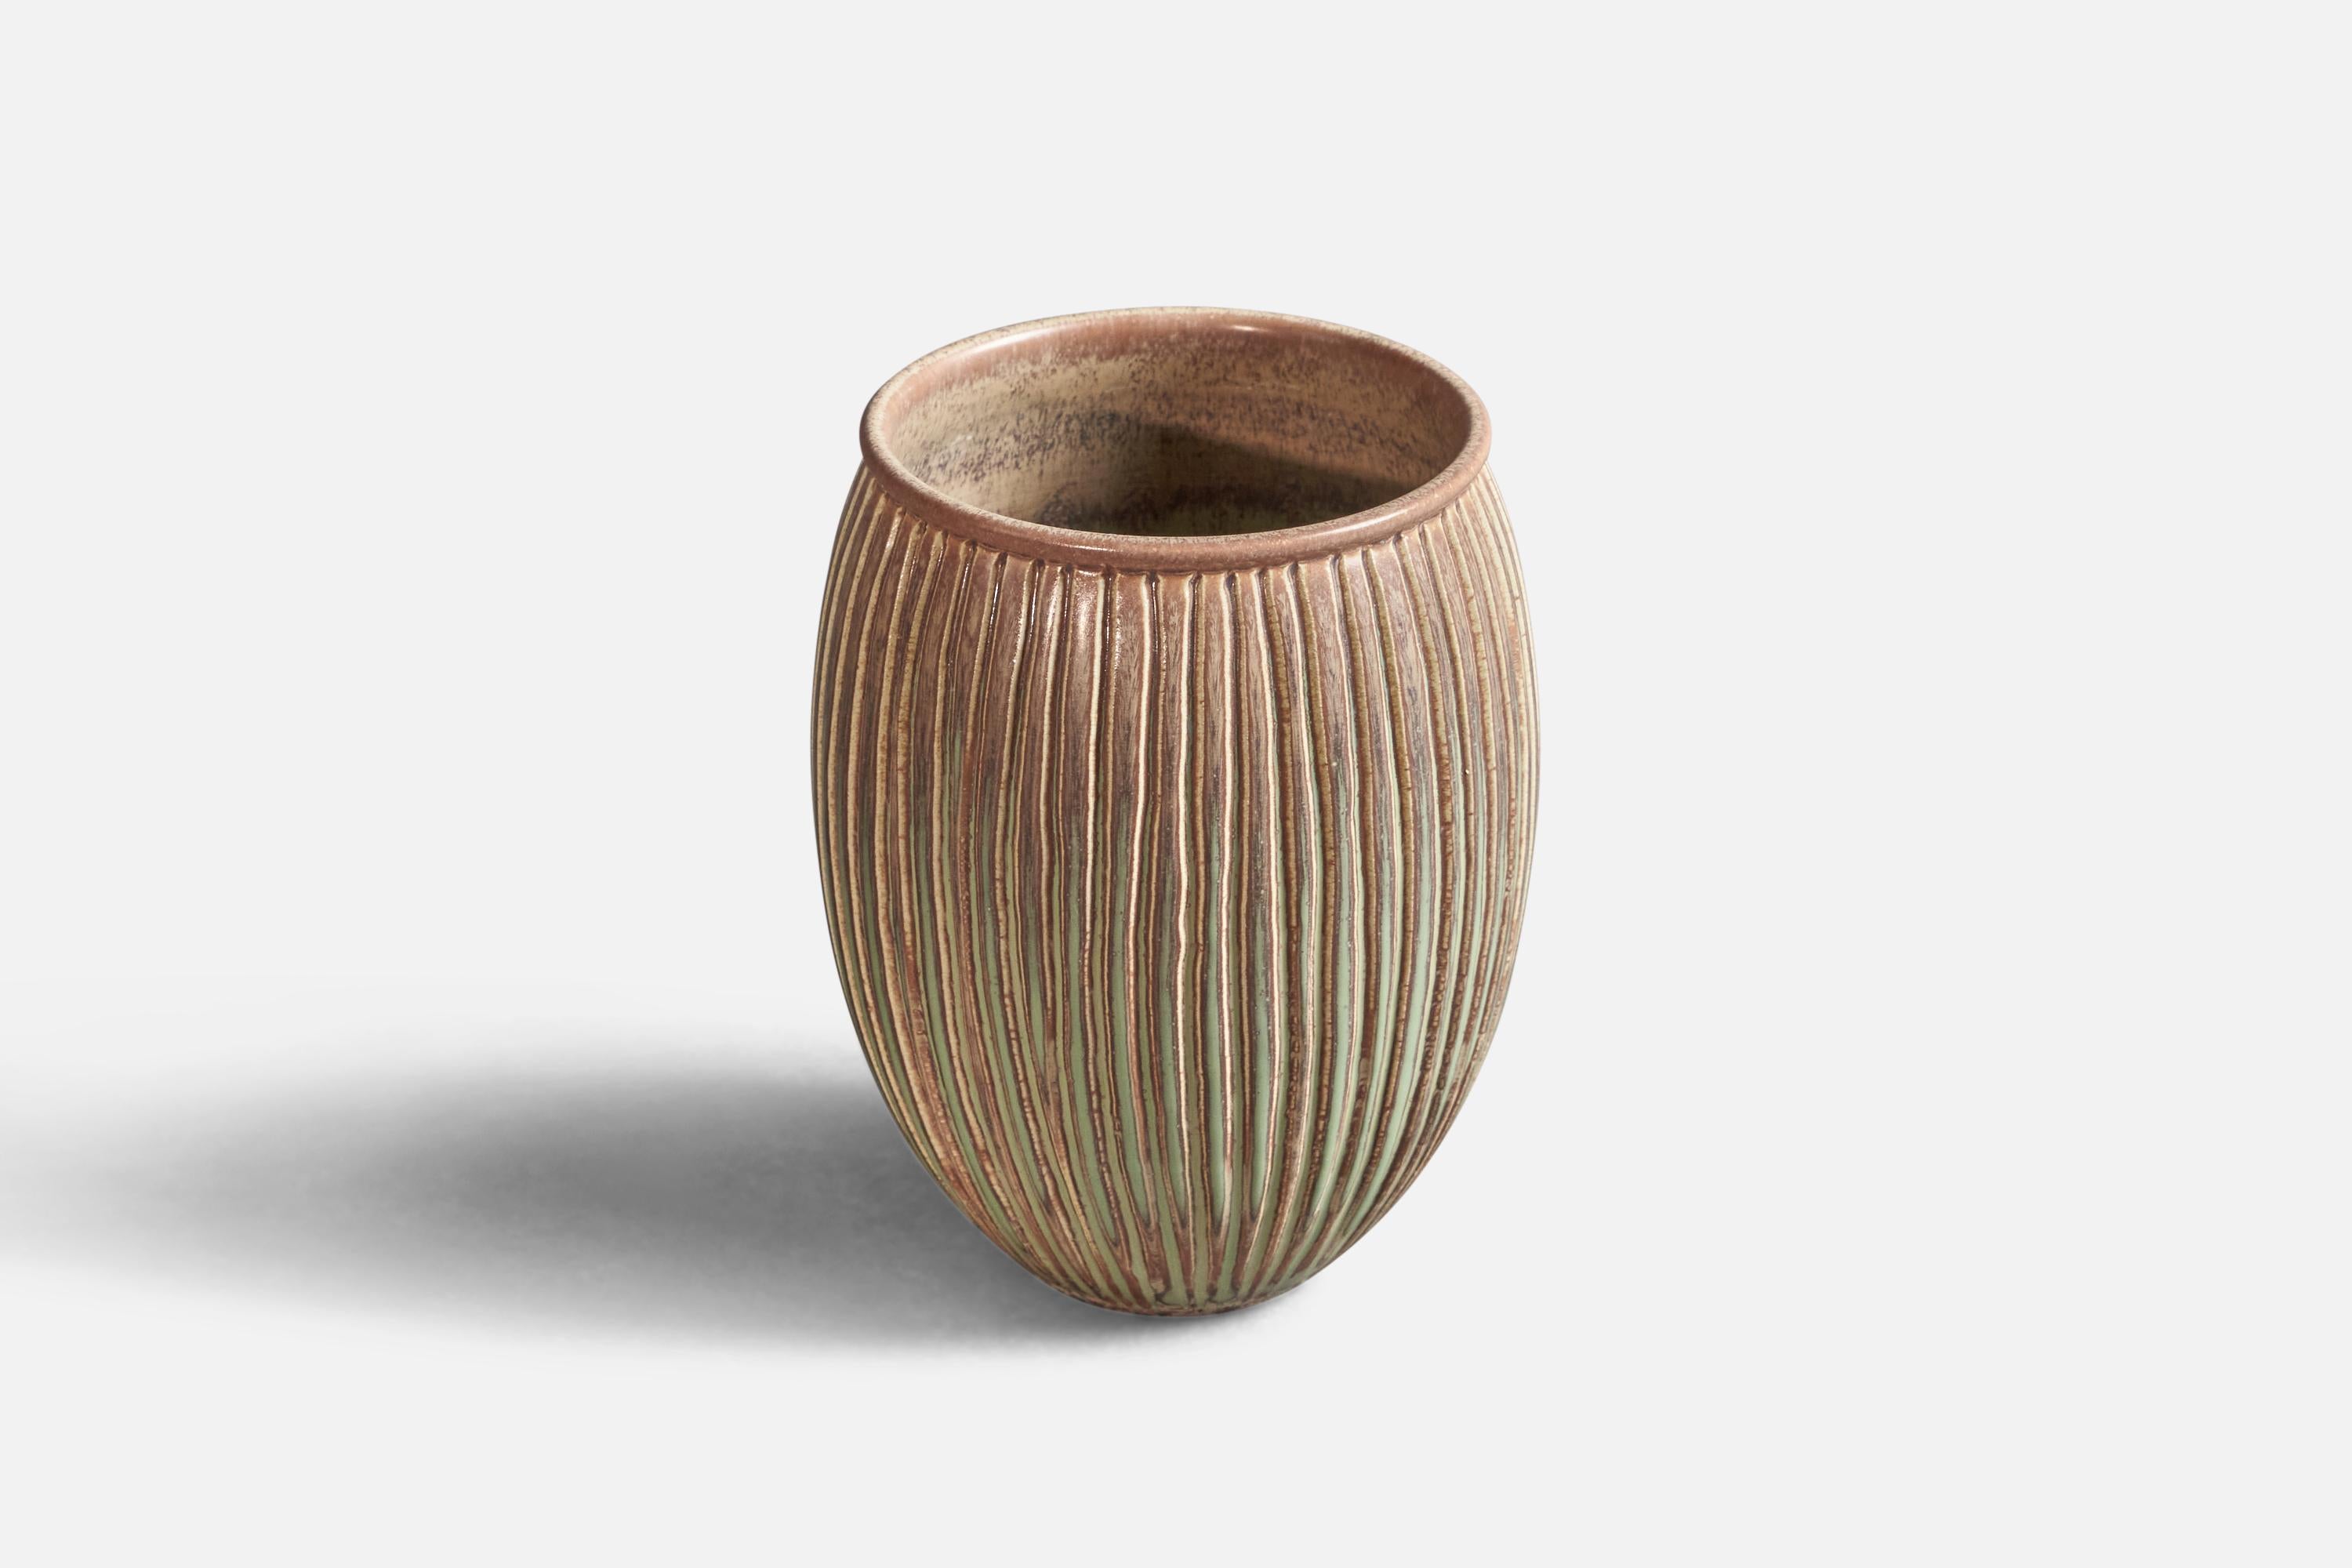 A fluted brown-glazed stoneware vase, designed by Stig Lindberg, produced by Gustavsberg, Sweden, c. 1960s.